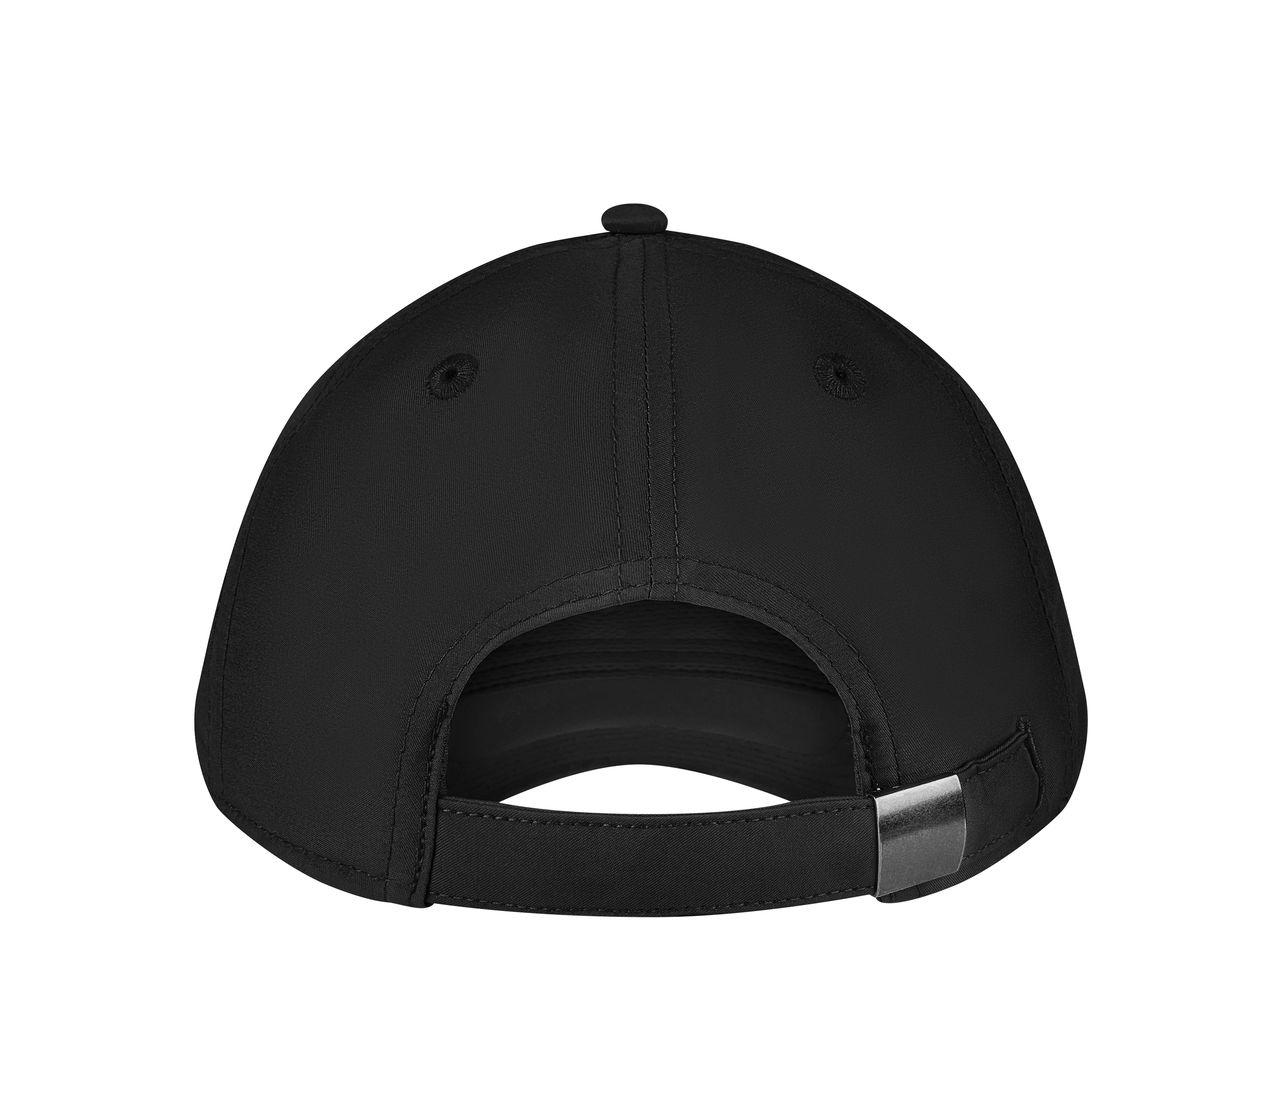 Victorinox Victorinox Brand Collection Basic Cap in black - 612486